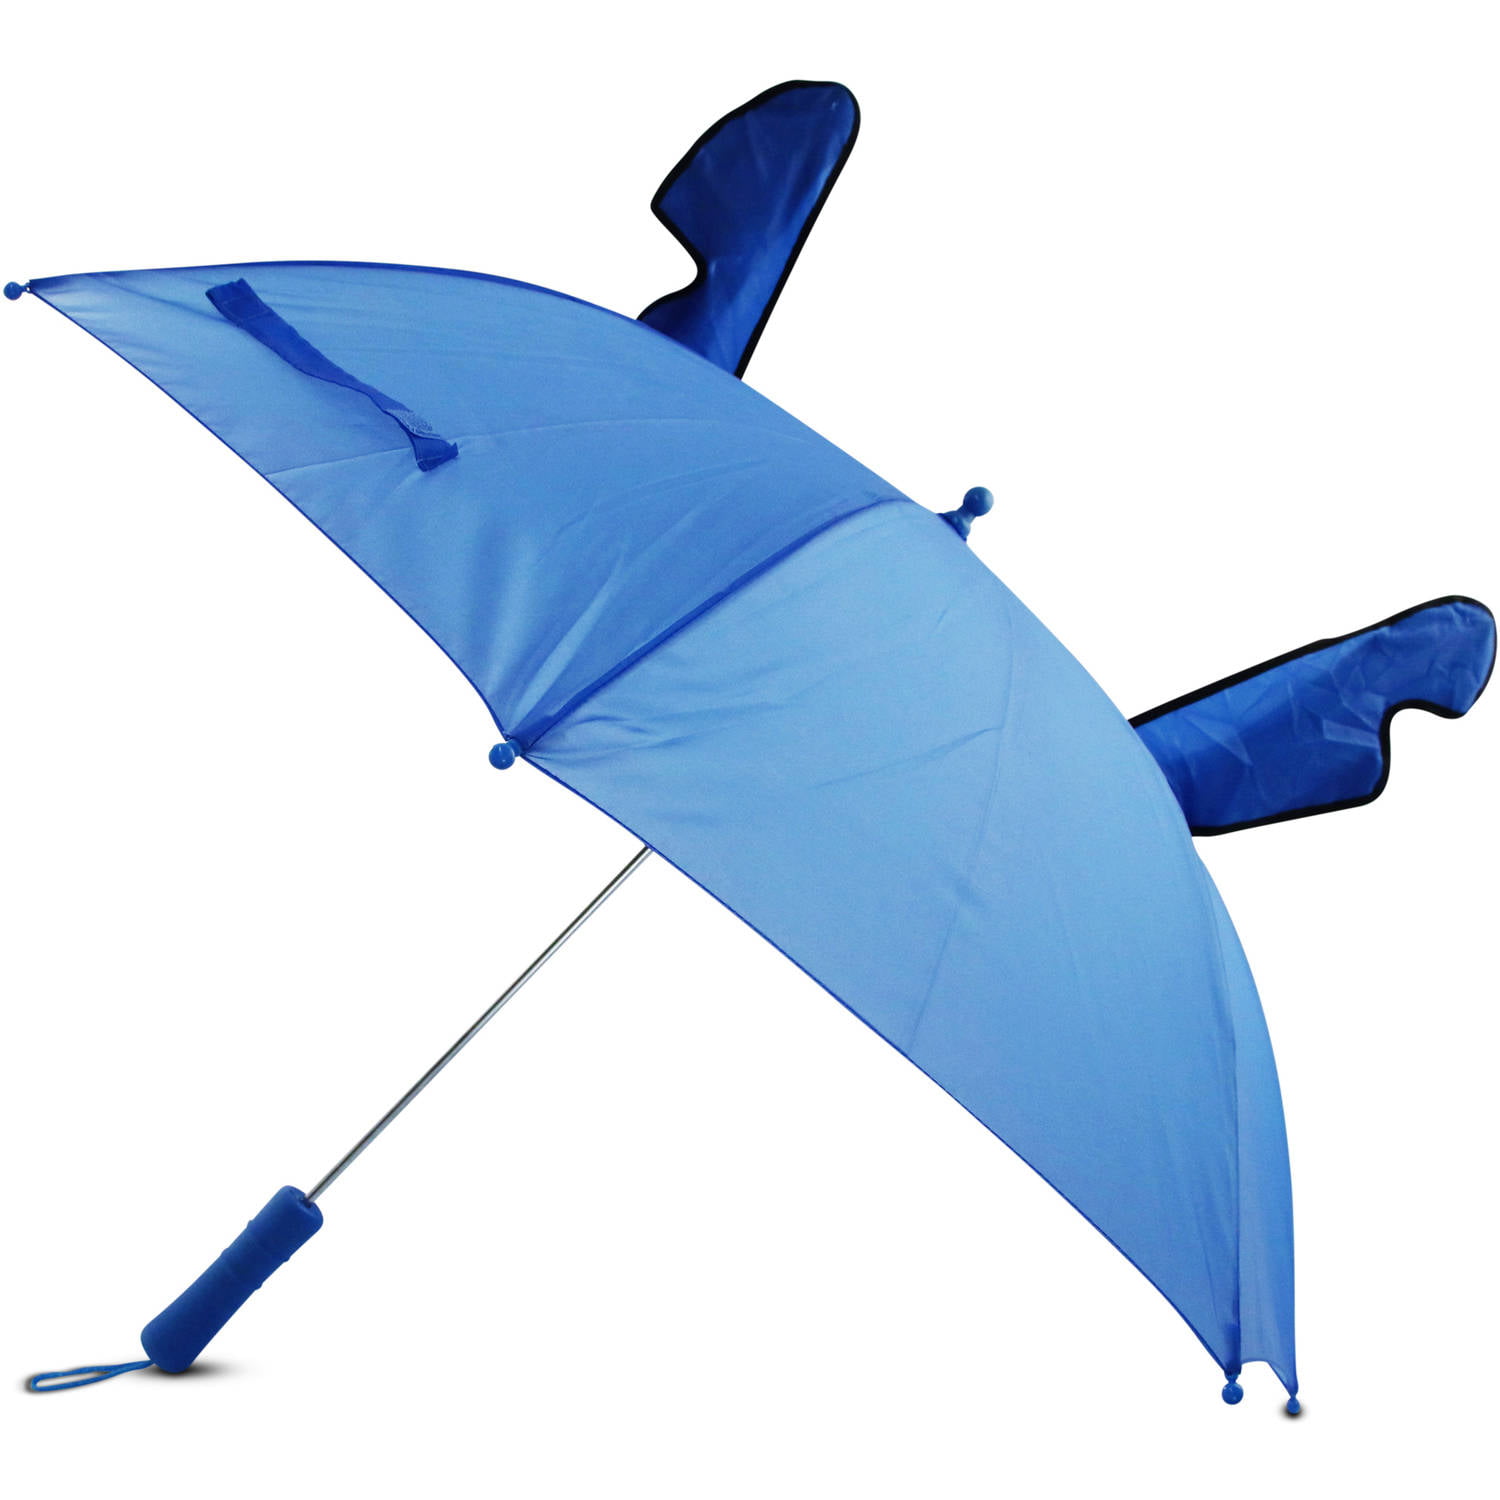 Disney Stitch Umbrella for Adults Teens Kids - Folding Telescopic Umbrella Lightweight Travel School Work Stitch Gifts